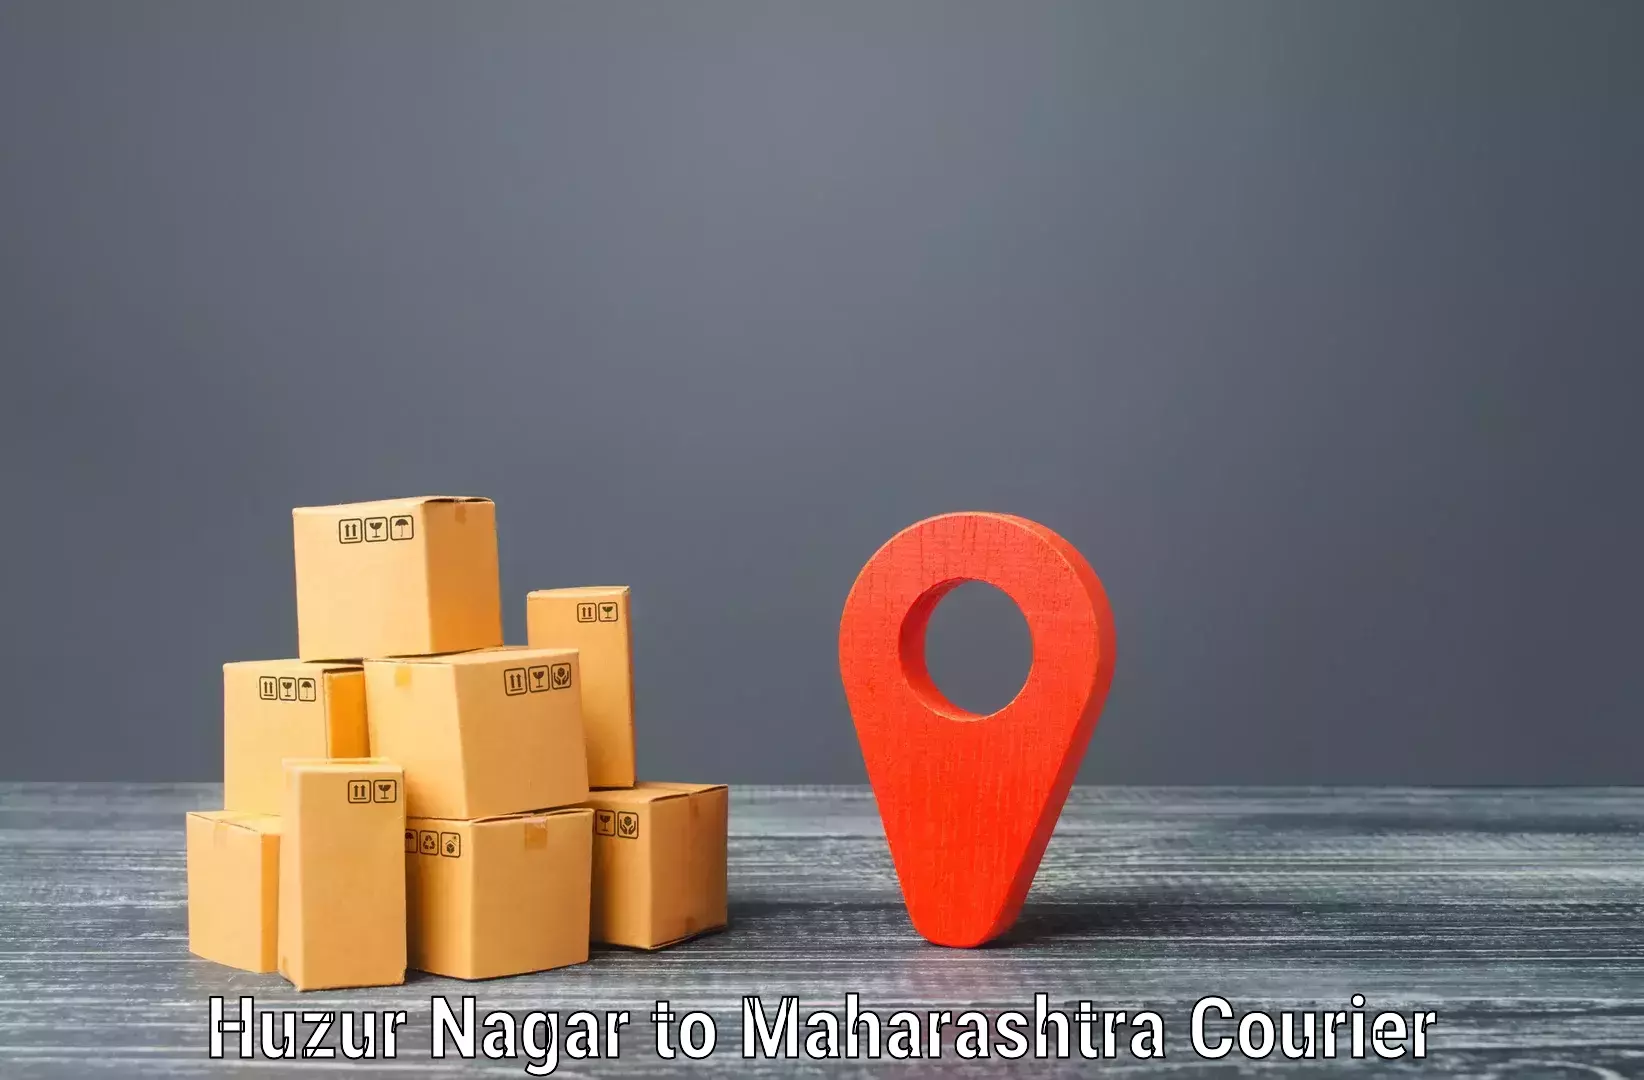 Trackable shipping service Huzur Nagar to Walchandnagar